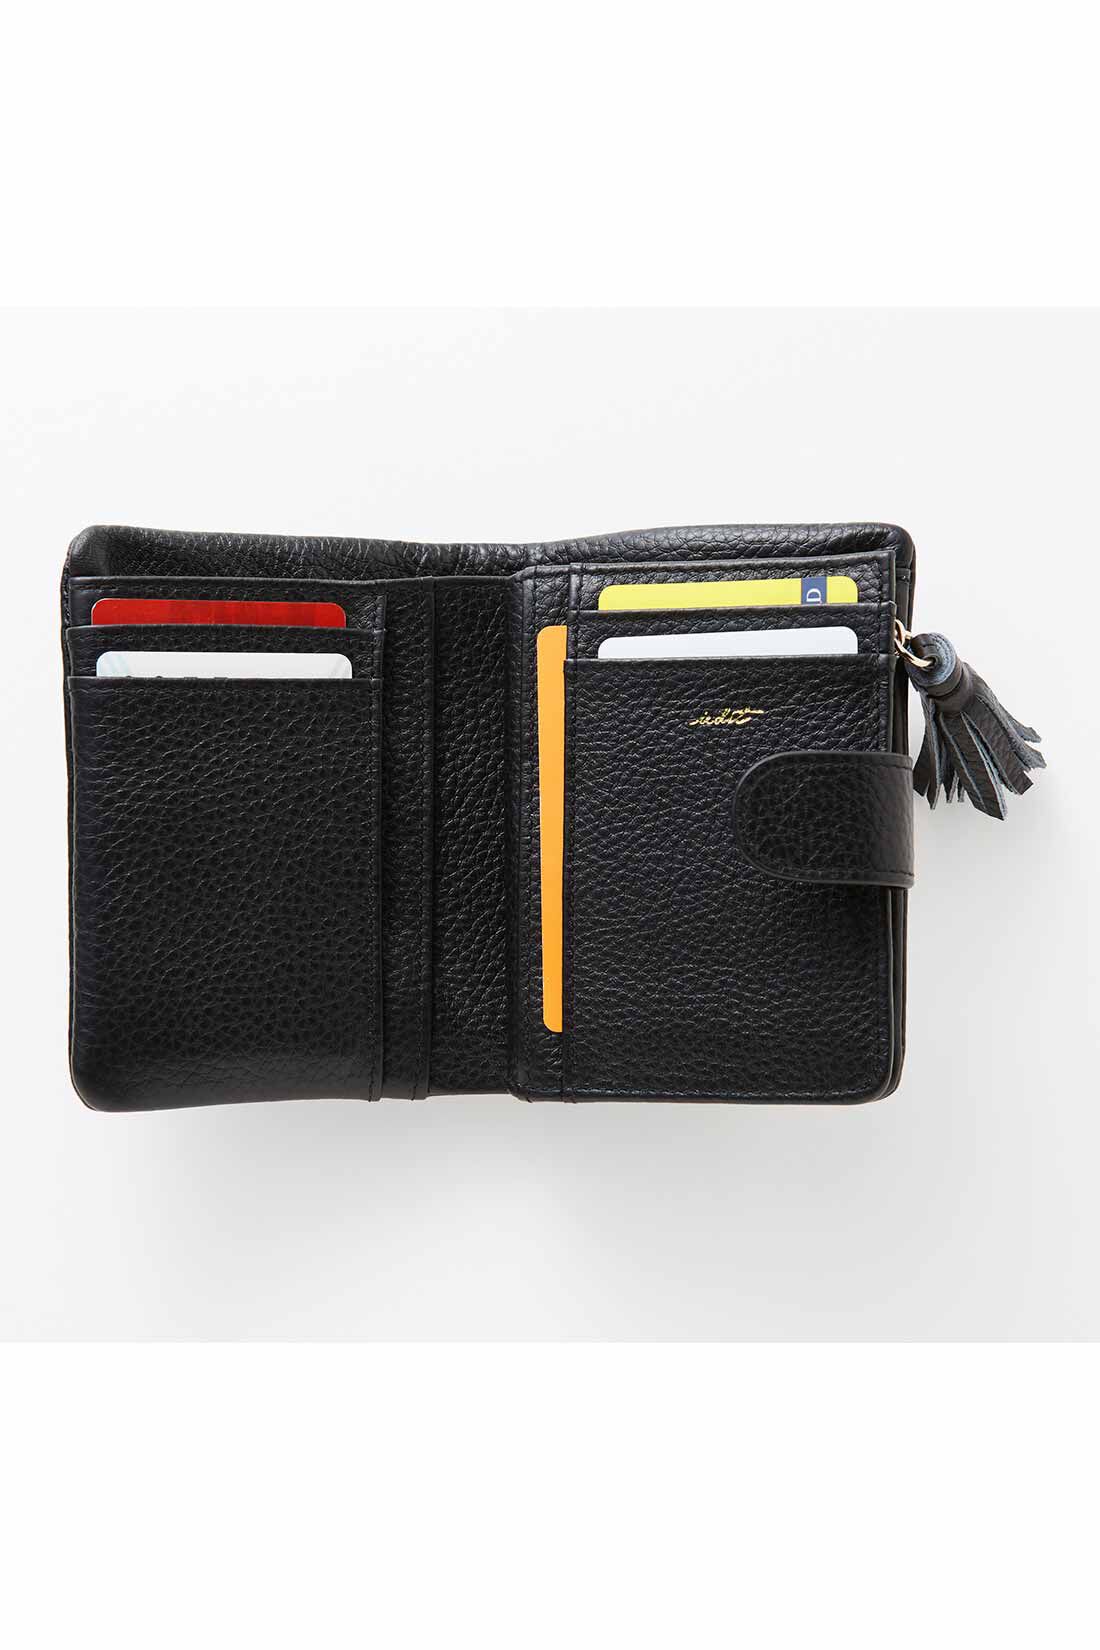 IEDIT|IEDIT[イディット]　くったり本革素材できれいめ二つ折り財布〈オレンジ〉|カードはたっぷり8枚収納可。